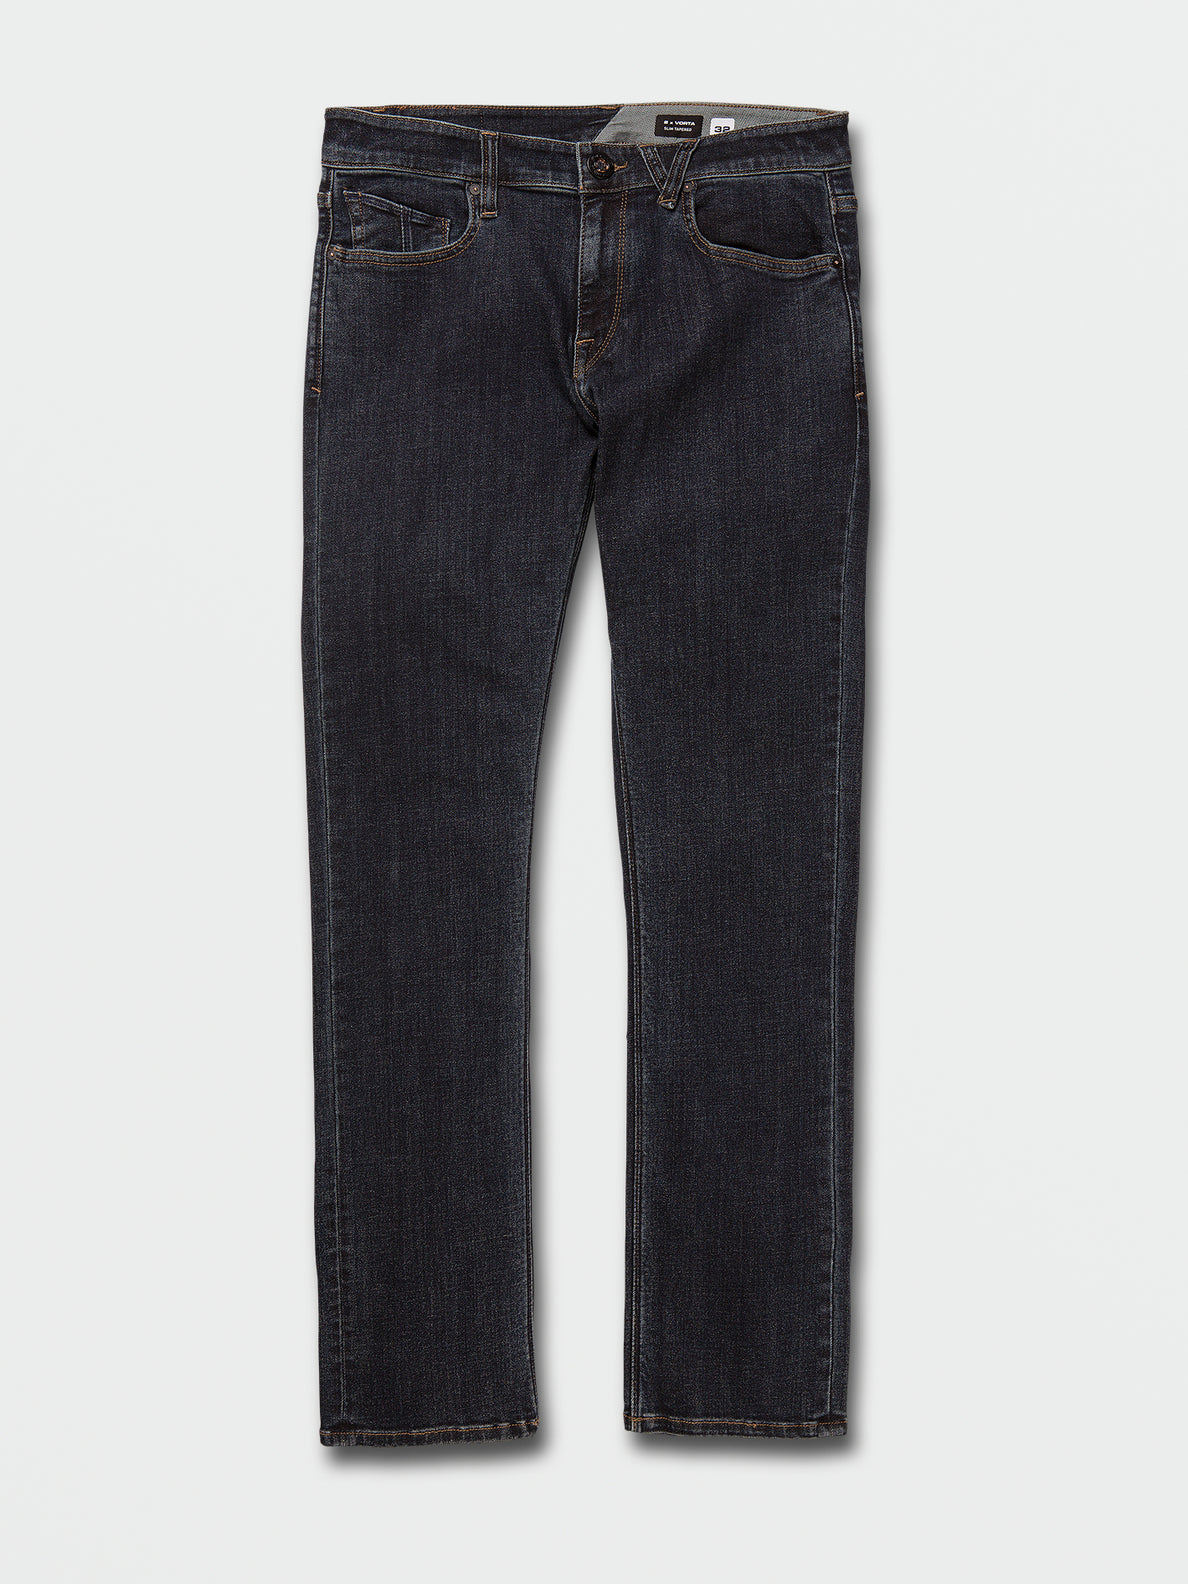 2 X Vorta Tapered Fit Jeans - Dirty Vintage Indigo